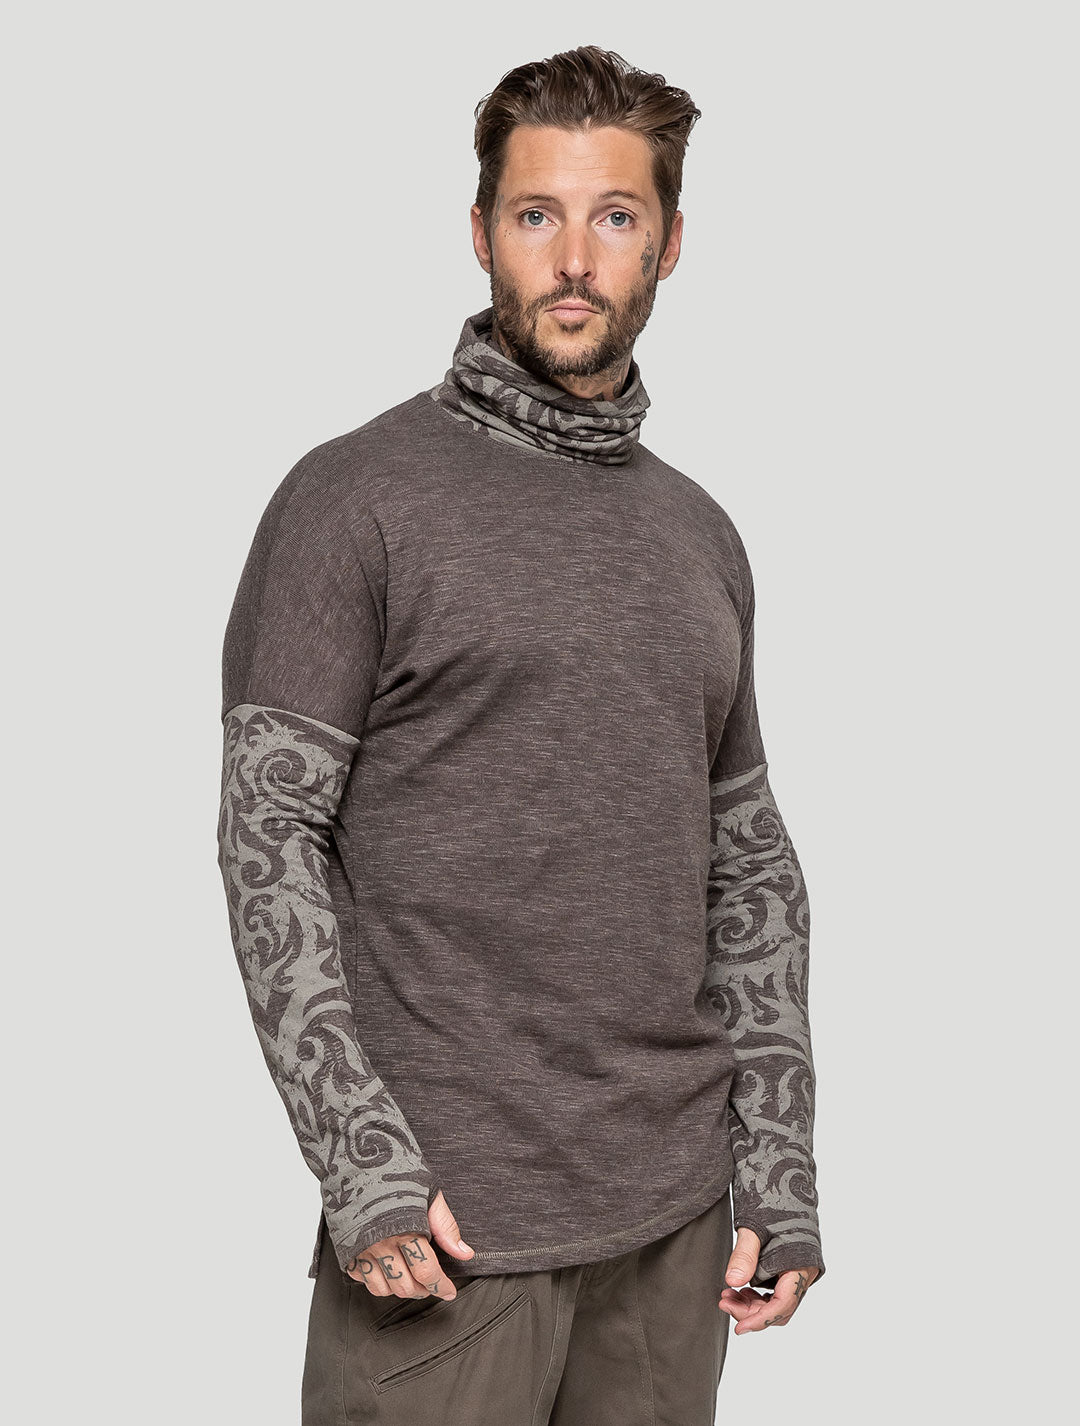 Apera Turtleneck Sweater